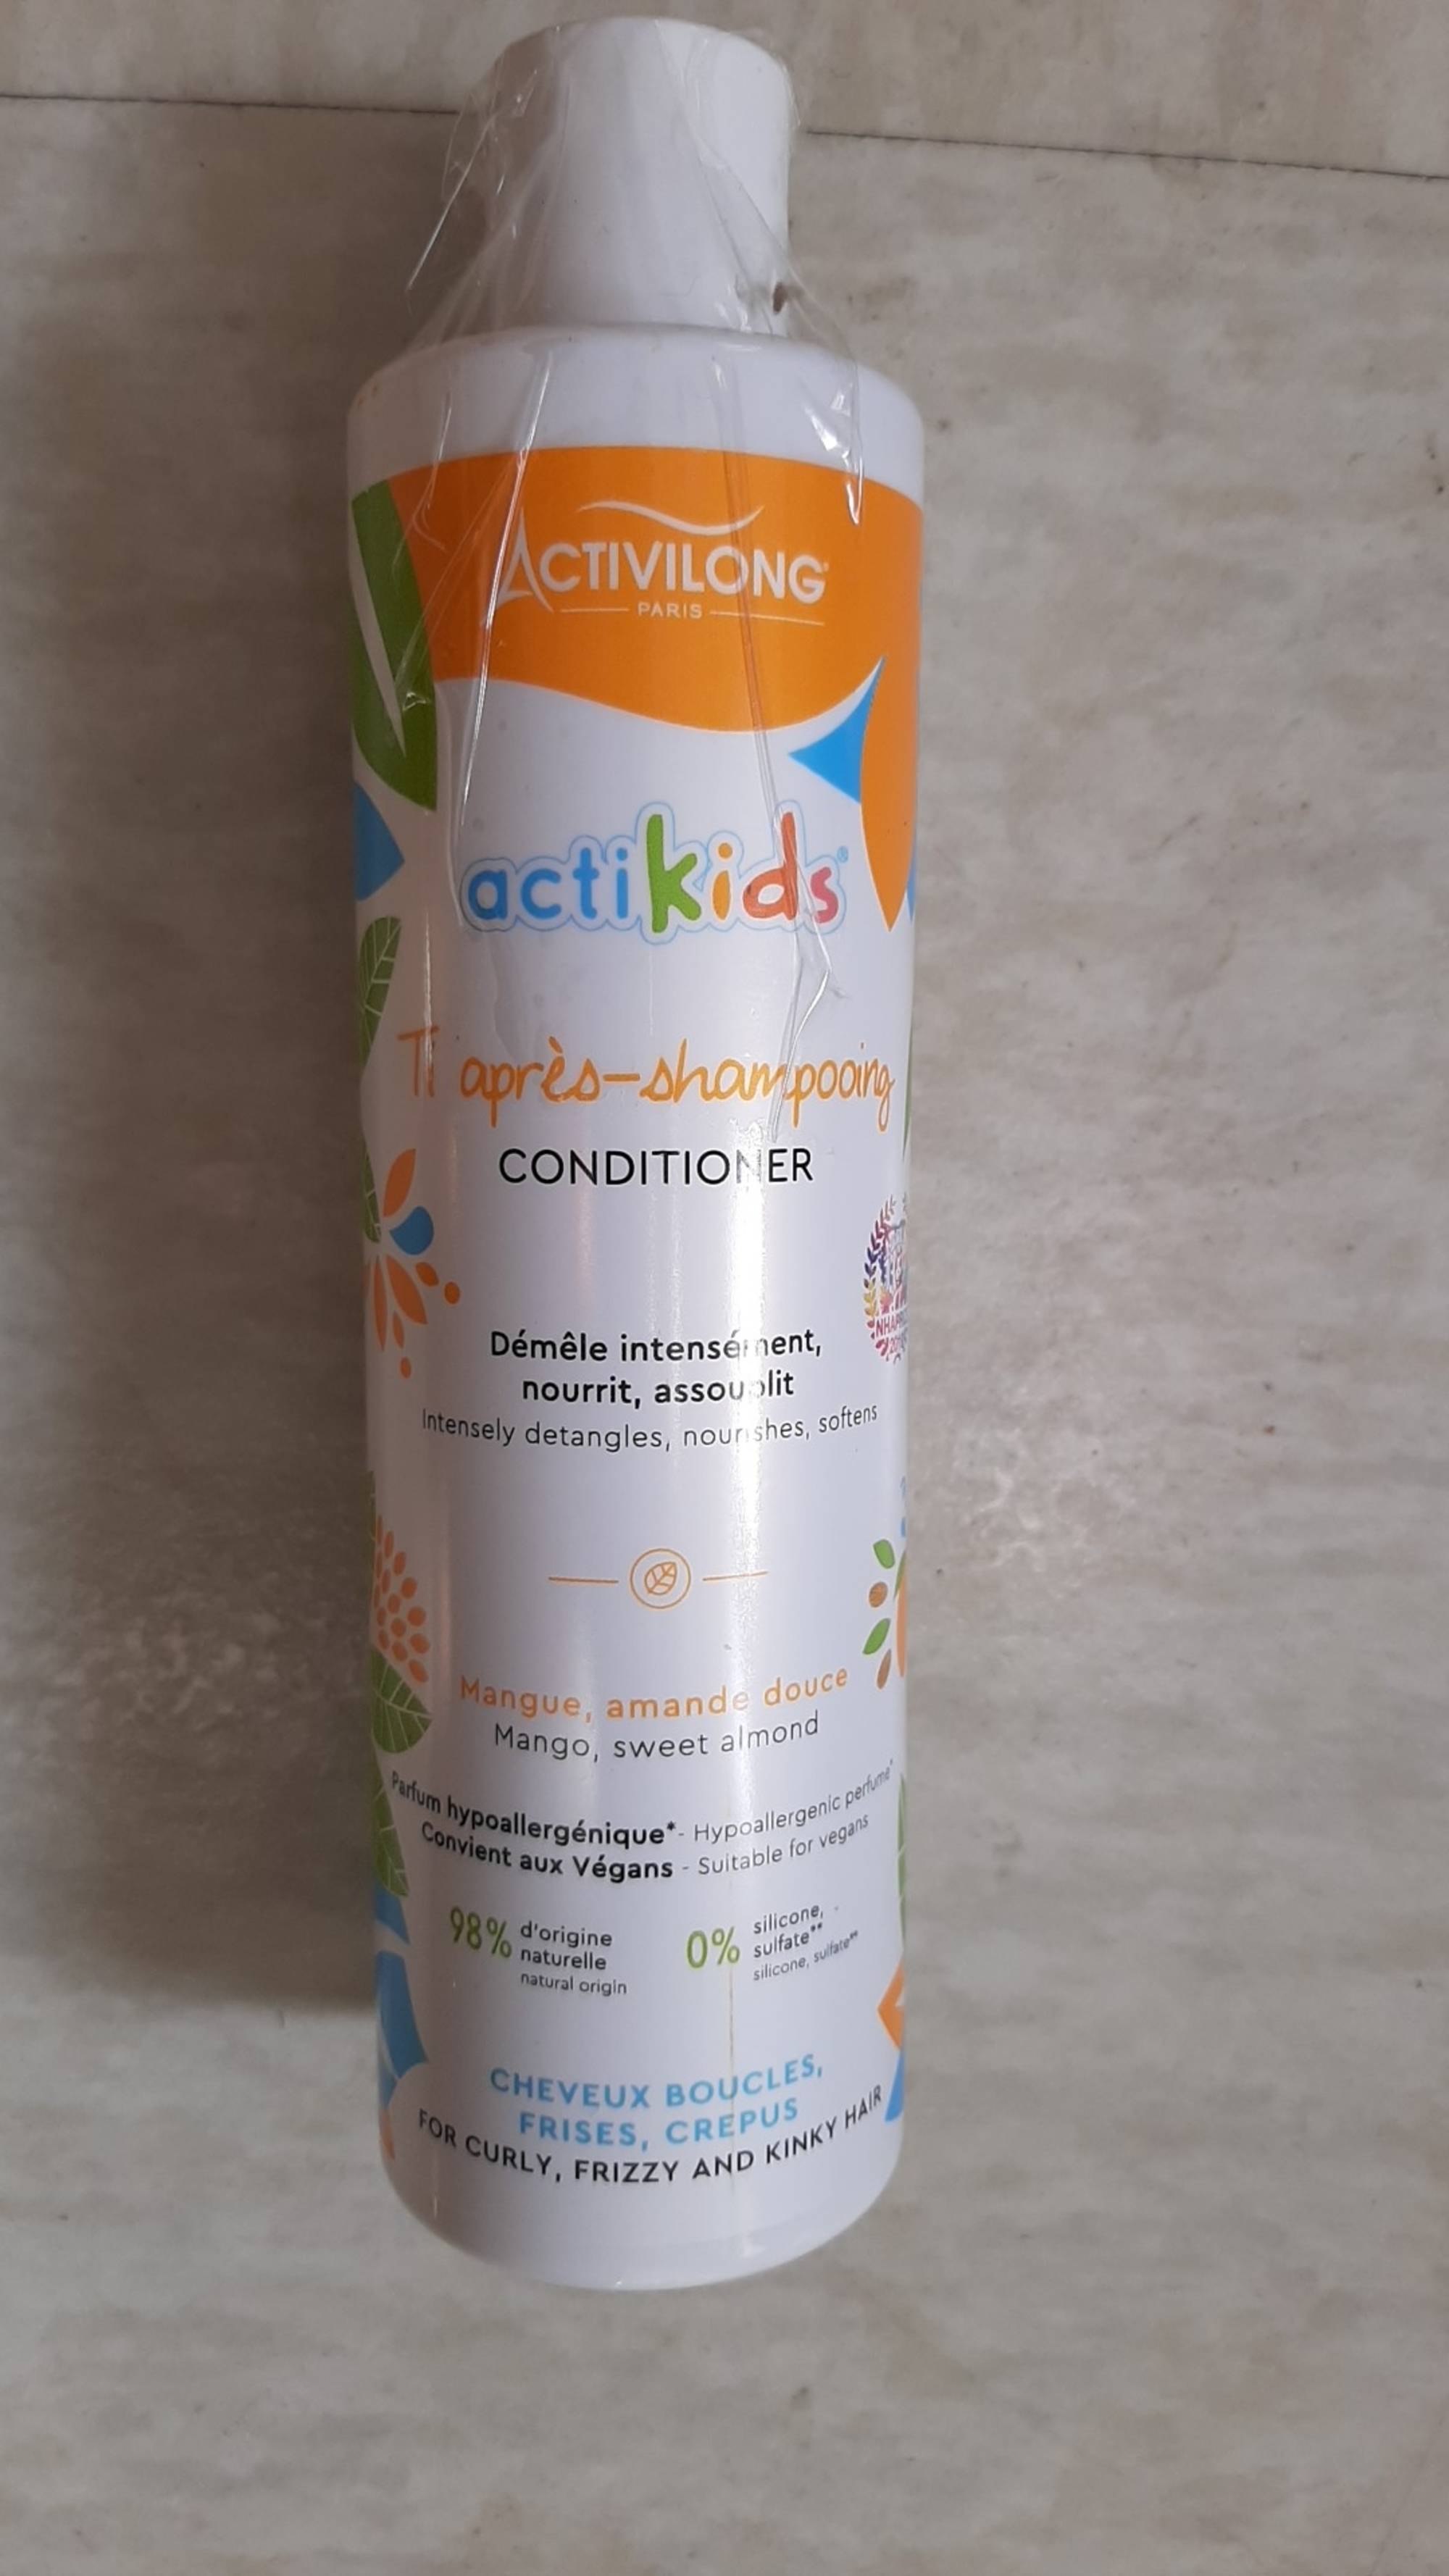 ACTIVILONG - ActiKids - Ti après-shampooing 